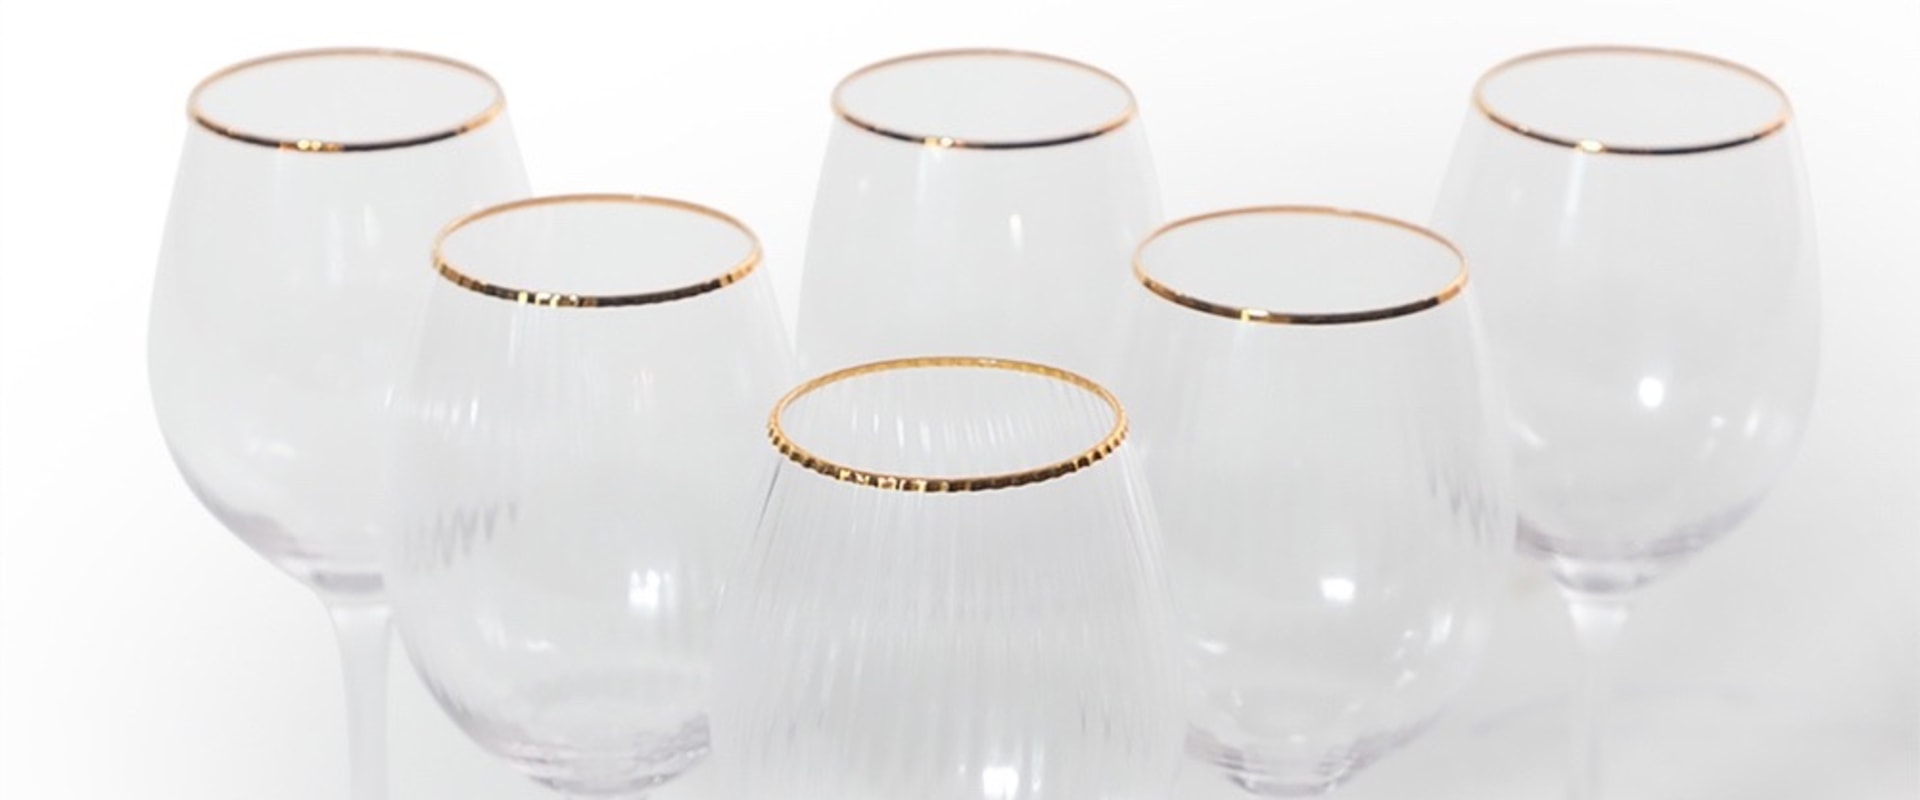 Where to Find the Best Fine Glassware